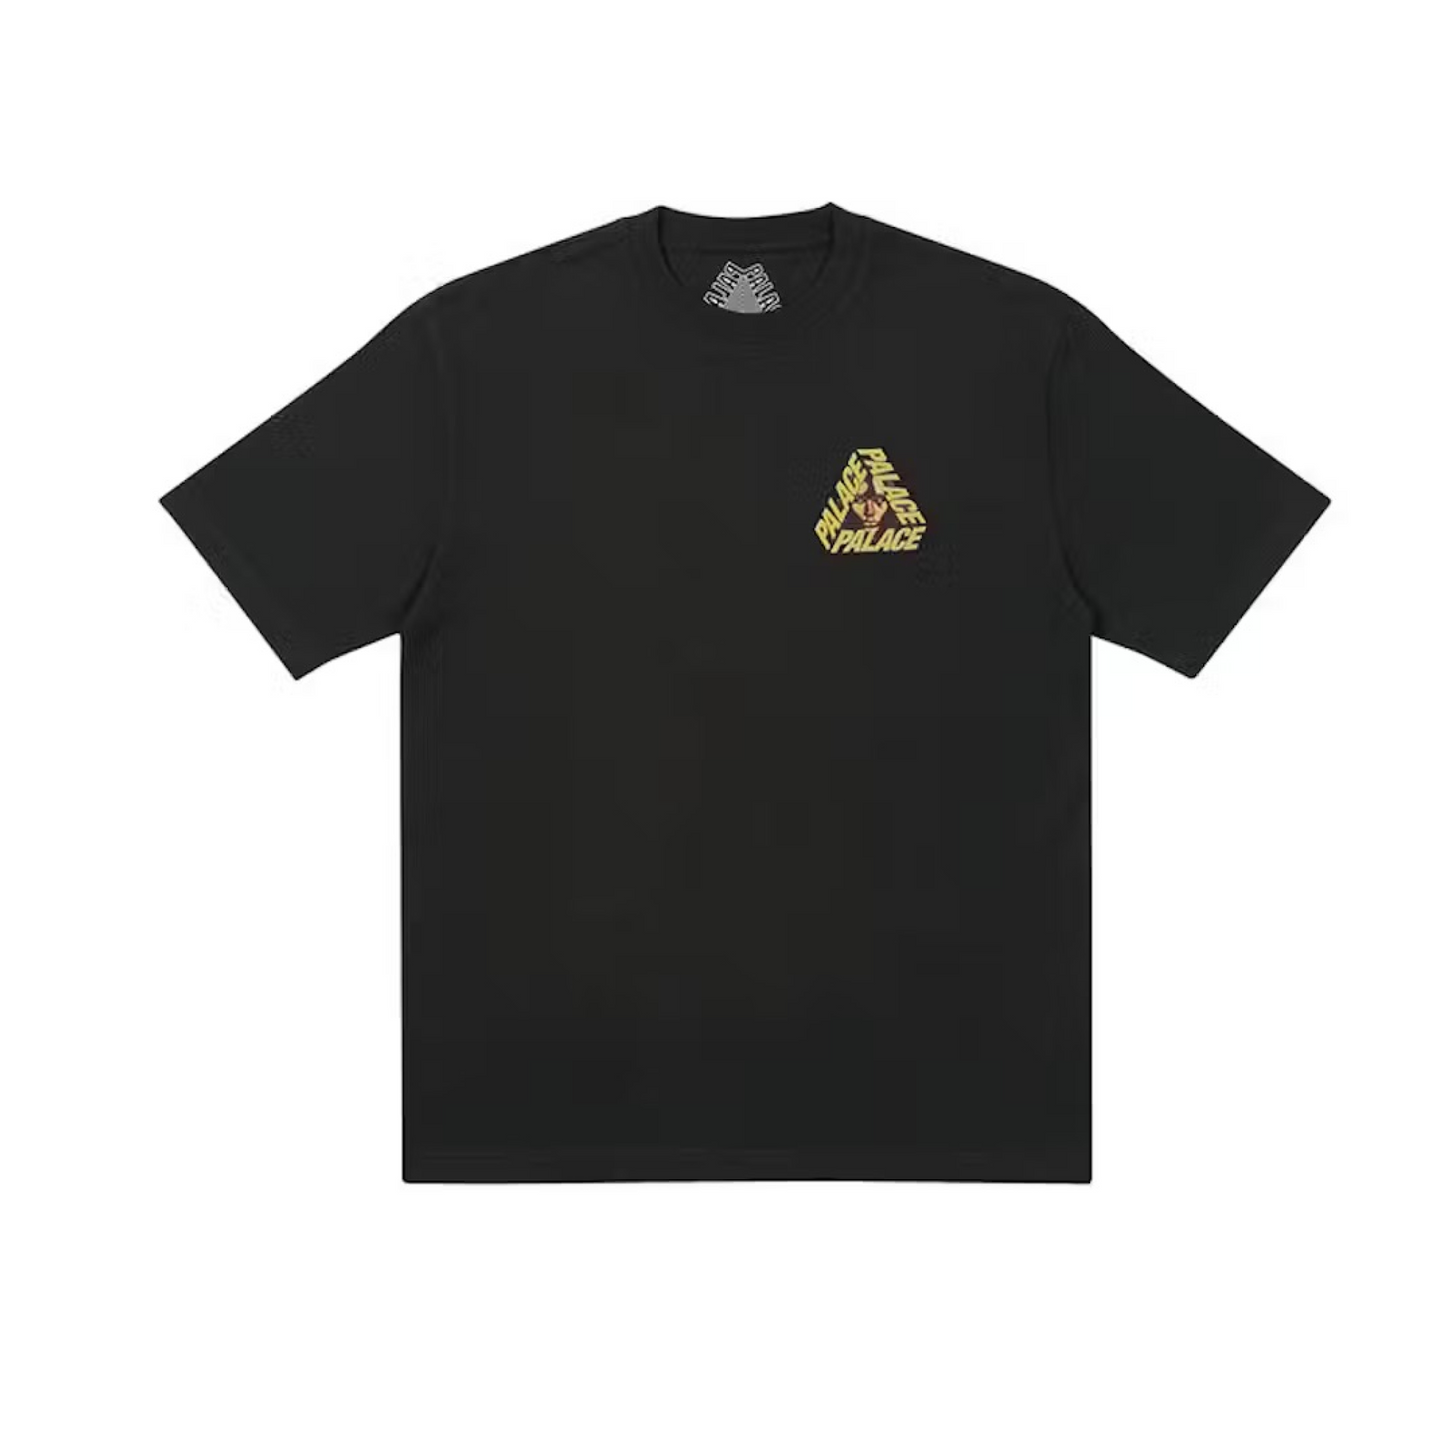 Palace G-Face T-shirt Black